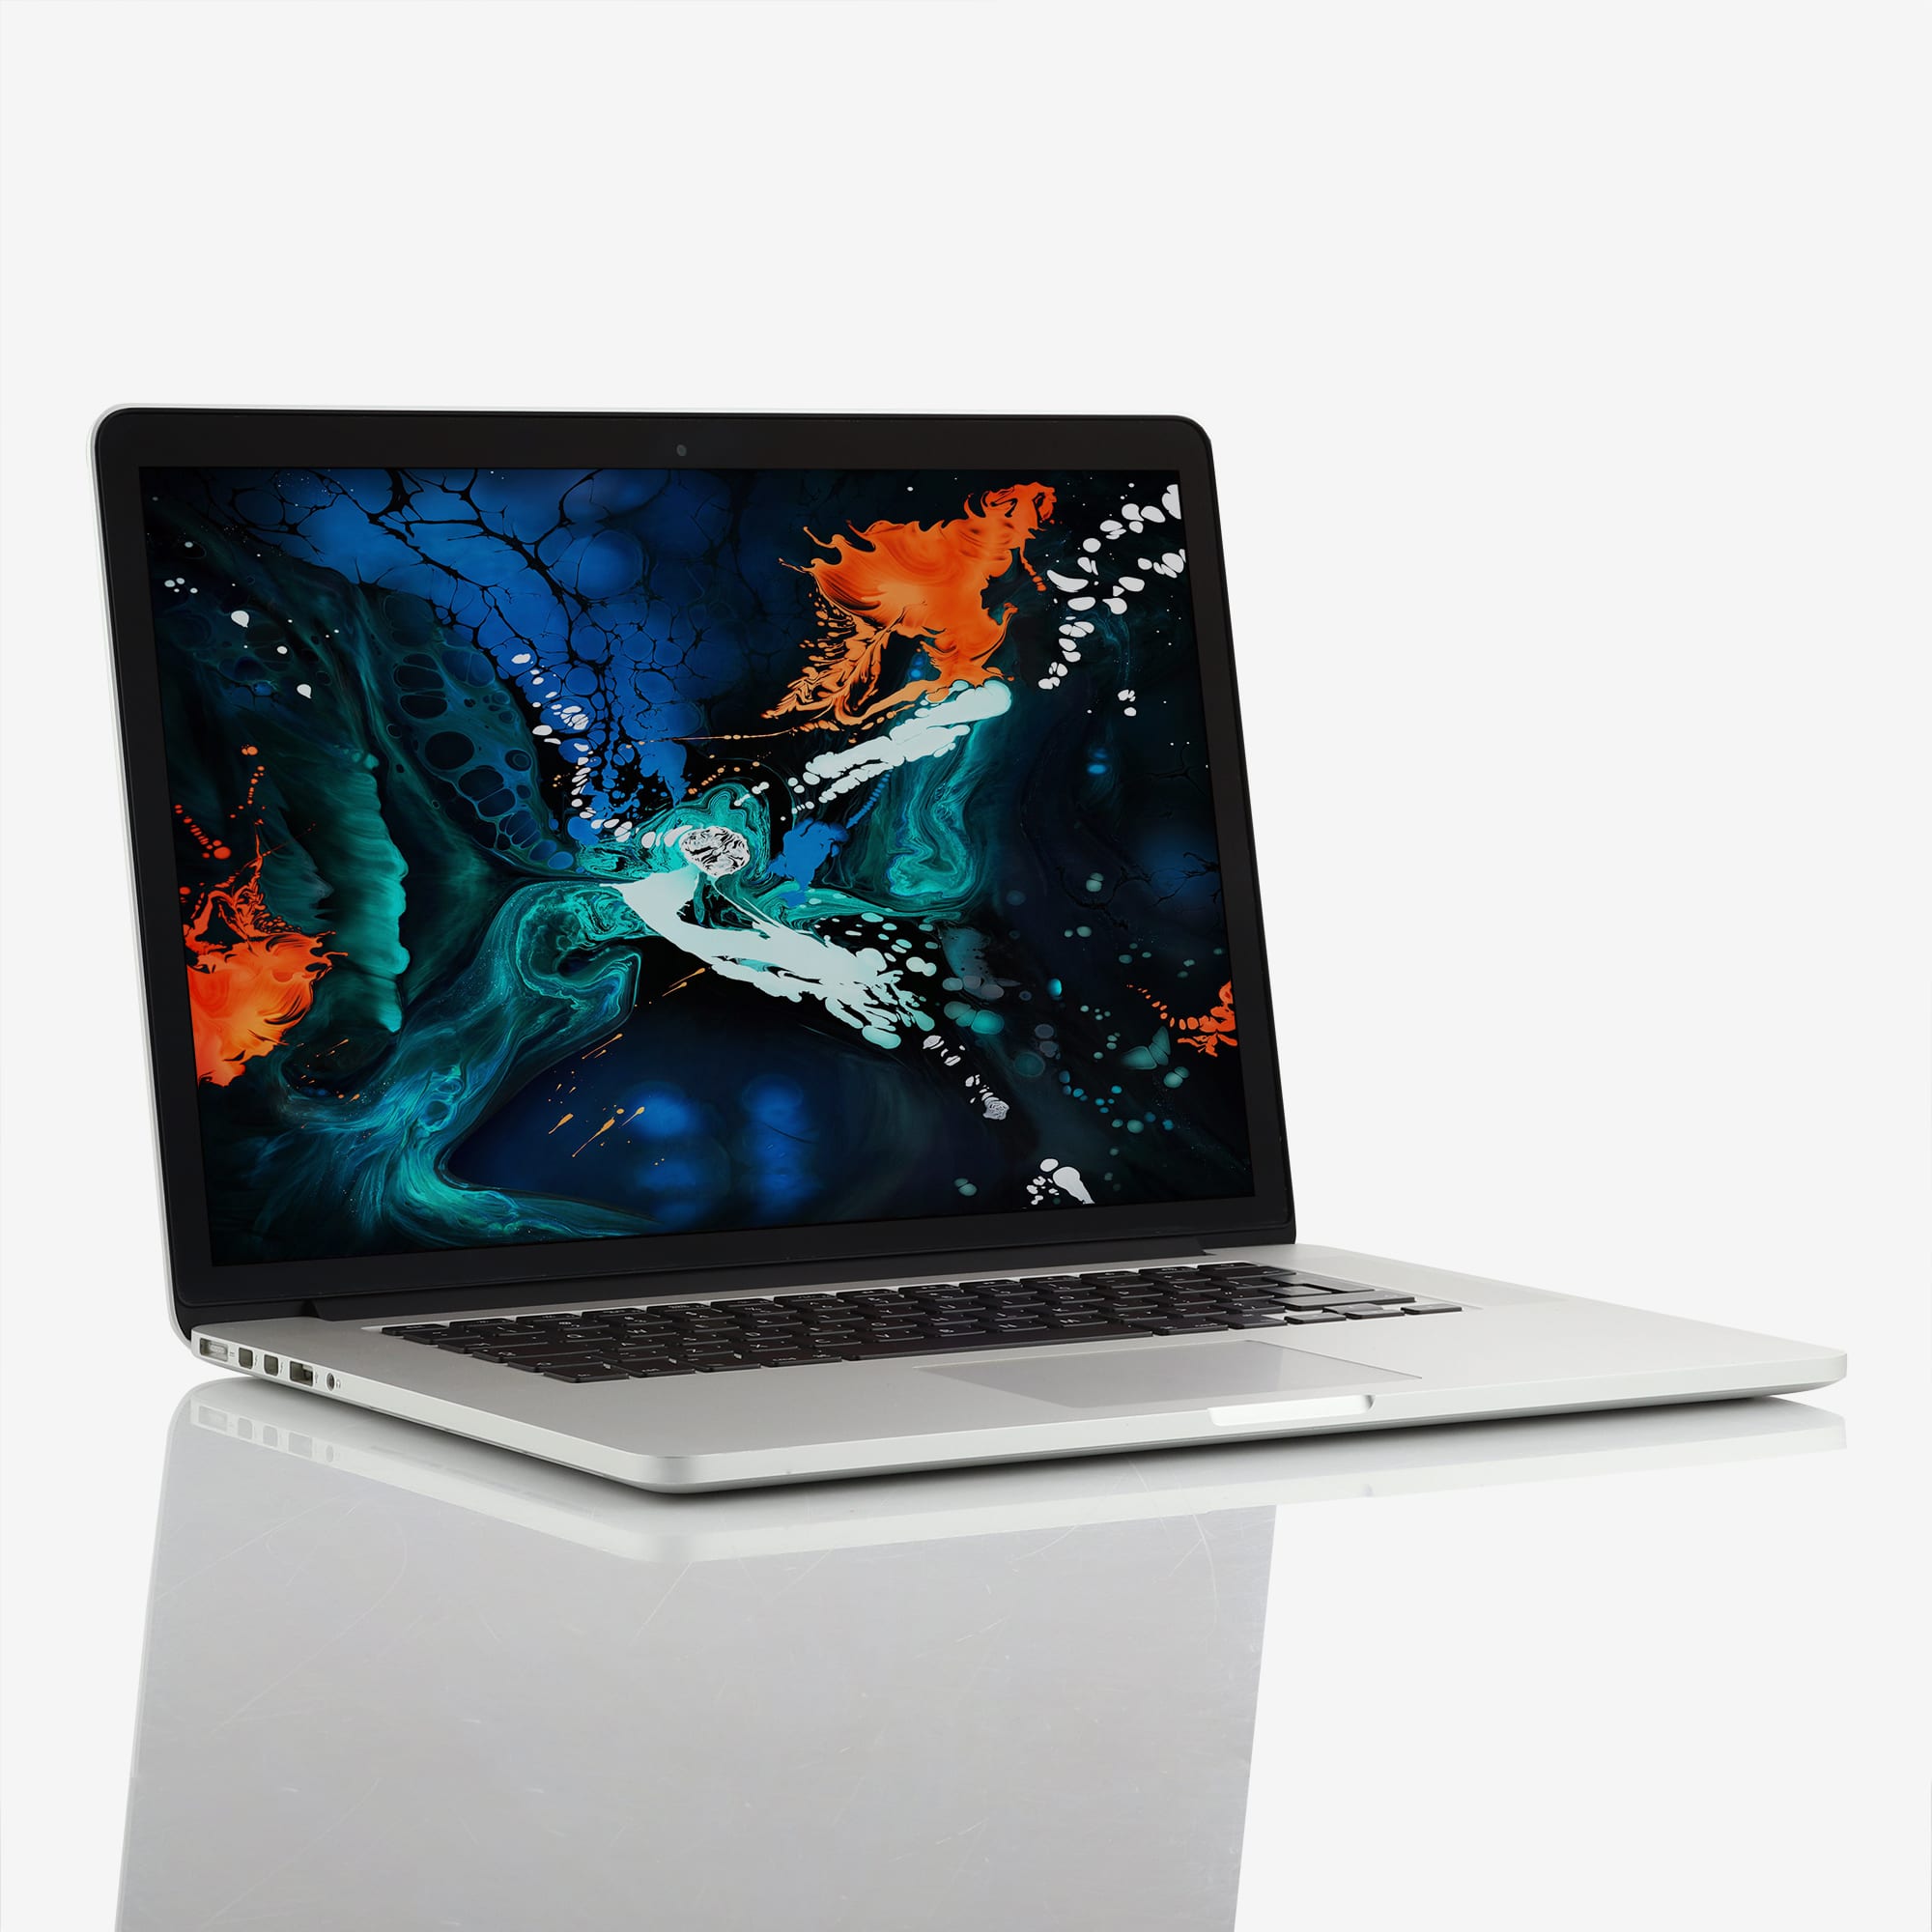 1 x Apple MacBook Pro Retina 15 Inch Intel Core i7 2.20 GHz (2014)